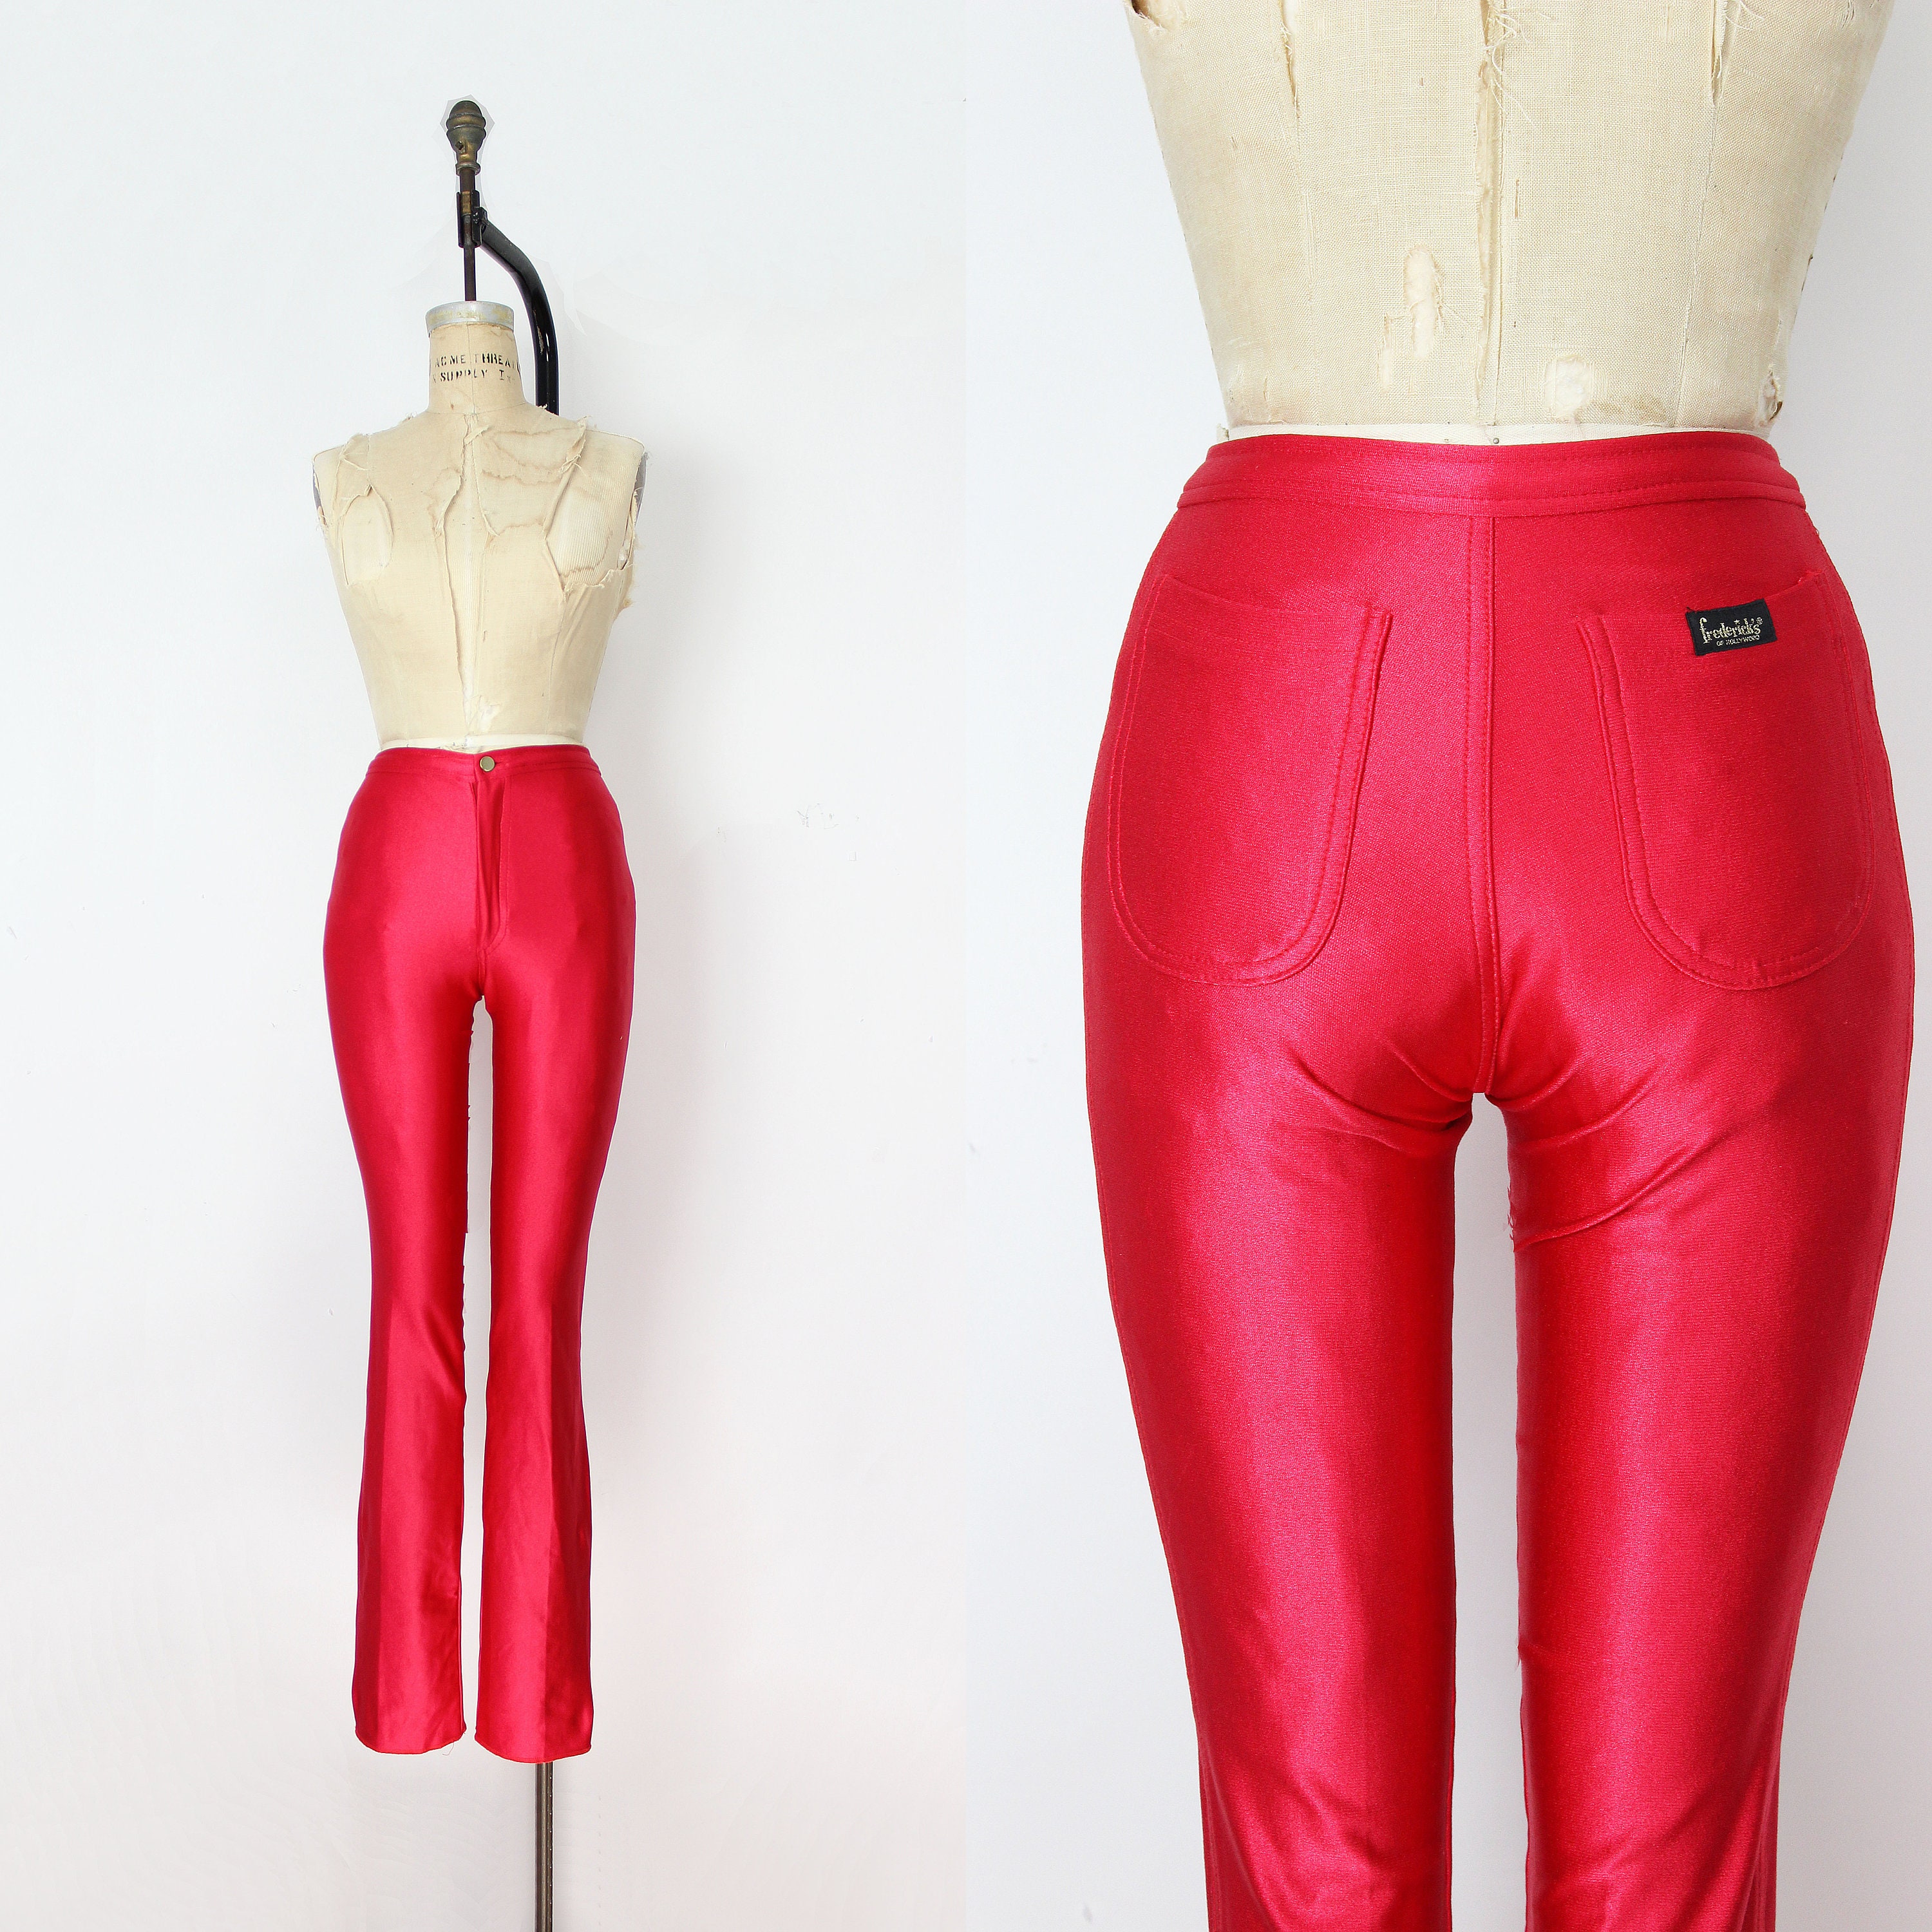 Vintage 70s Disco Pants / 1970s Liquid Red Satin Pants